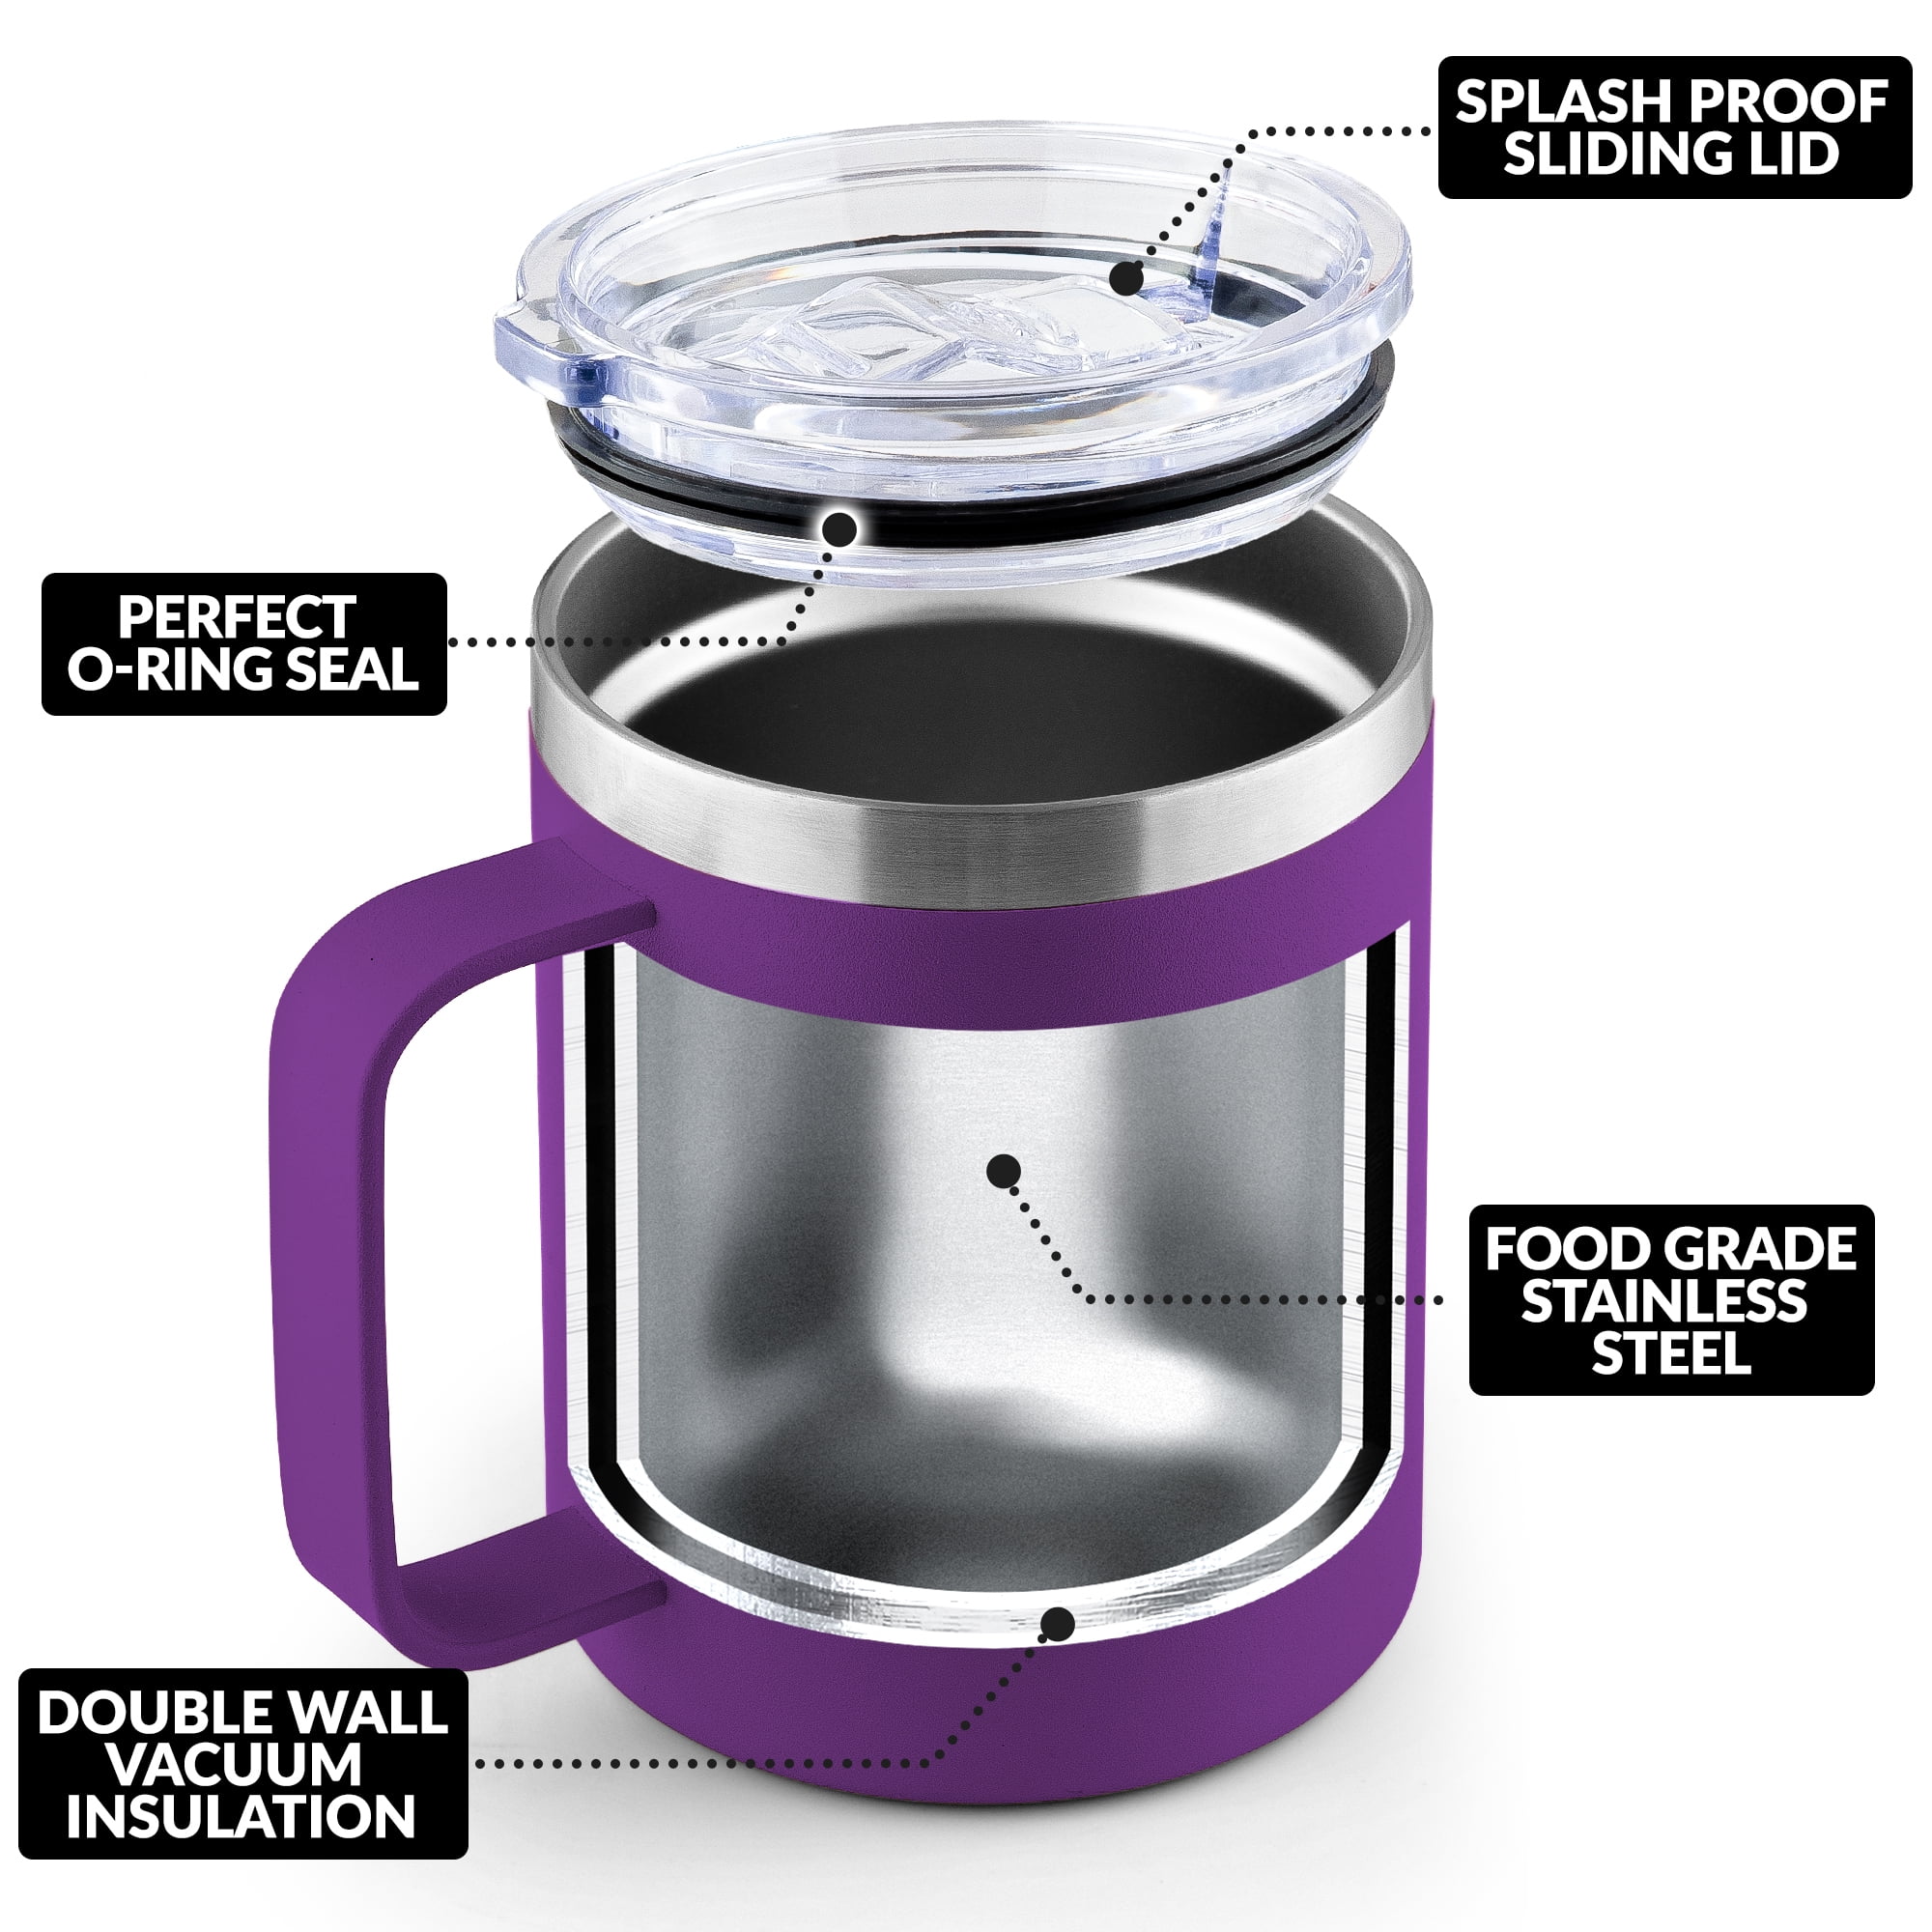 Kitcheniva Electric Double Insulated Self Stirring Mug 400ml, 1 Pcs - Ralphs